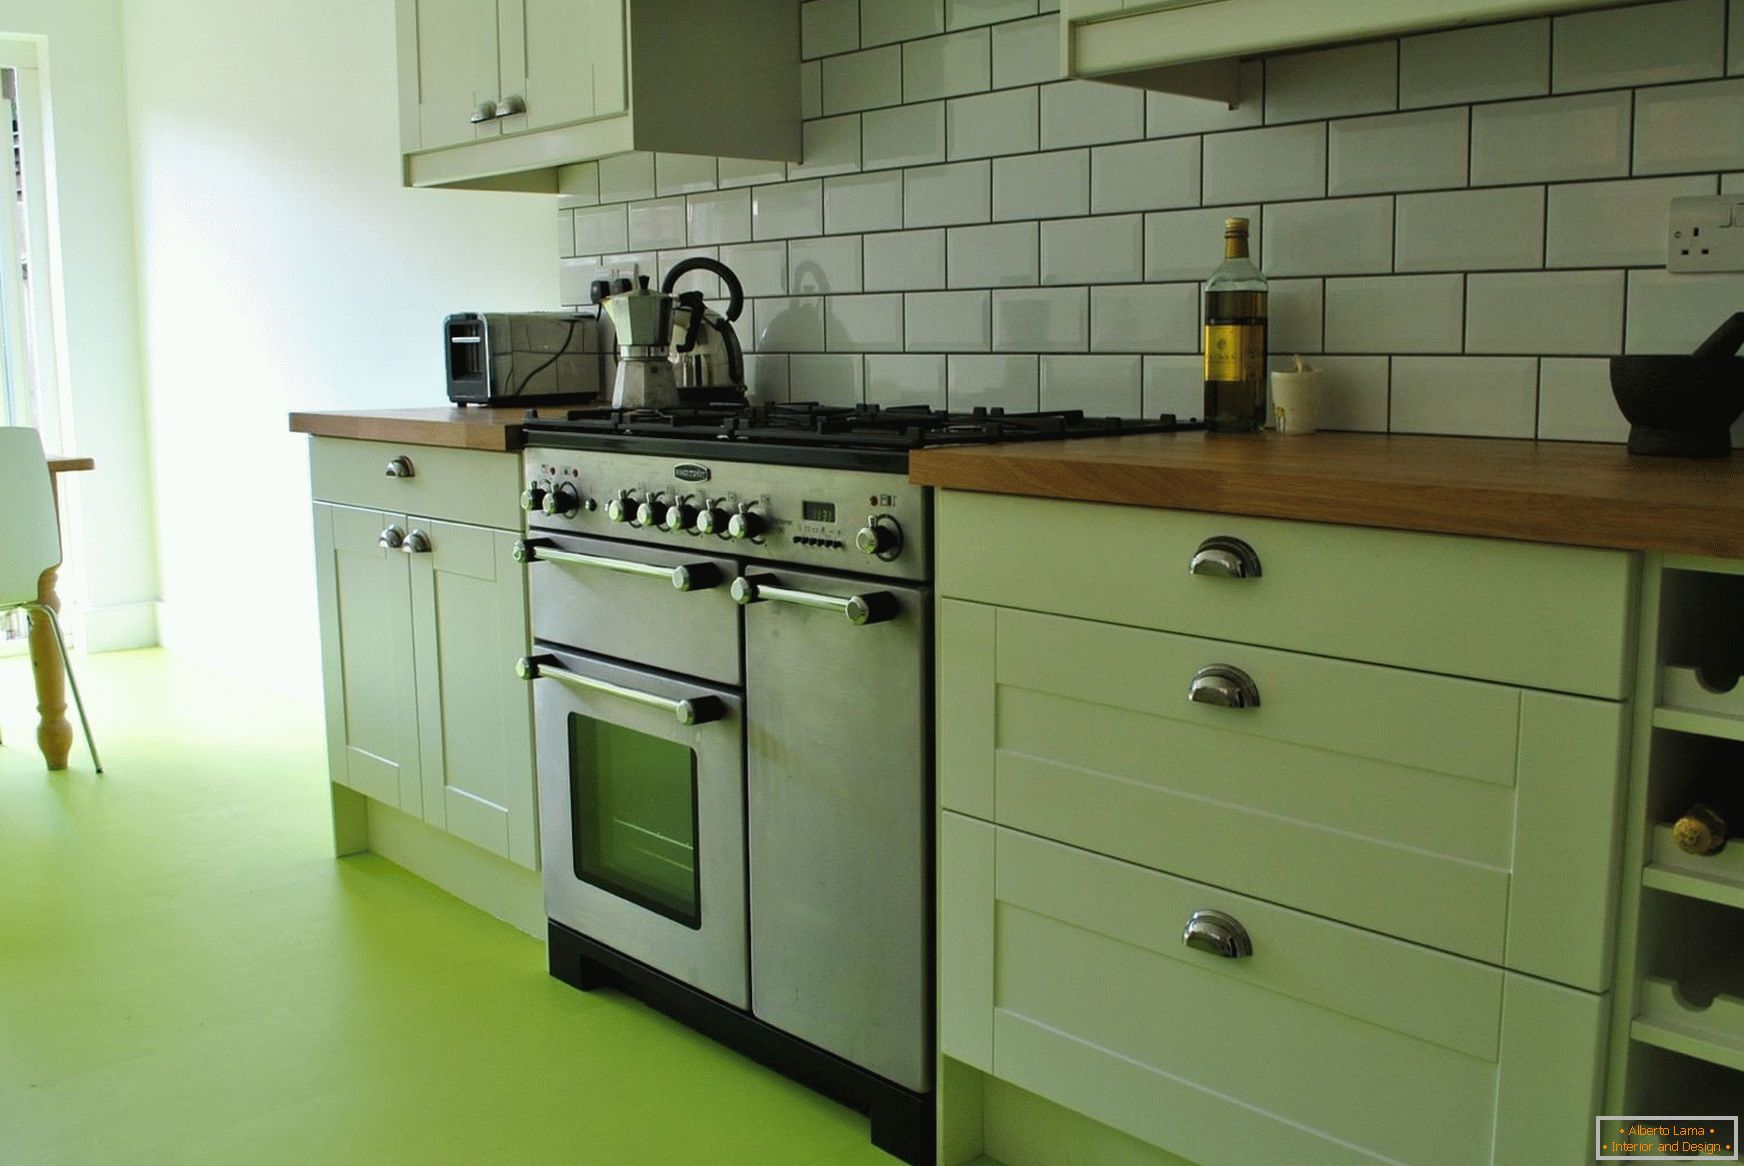 Green kitchen in the interior